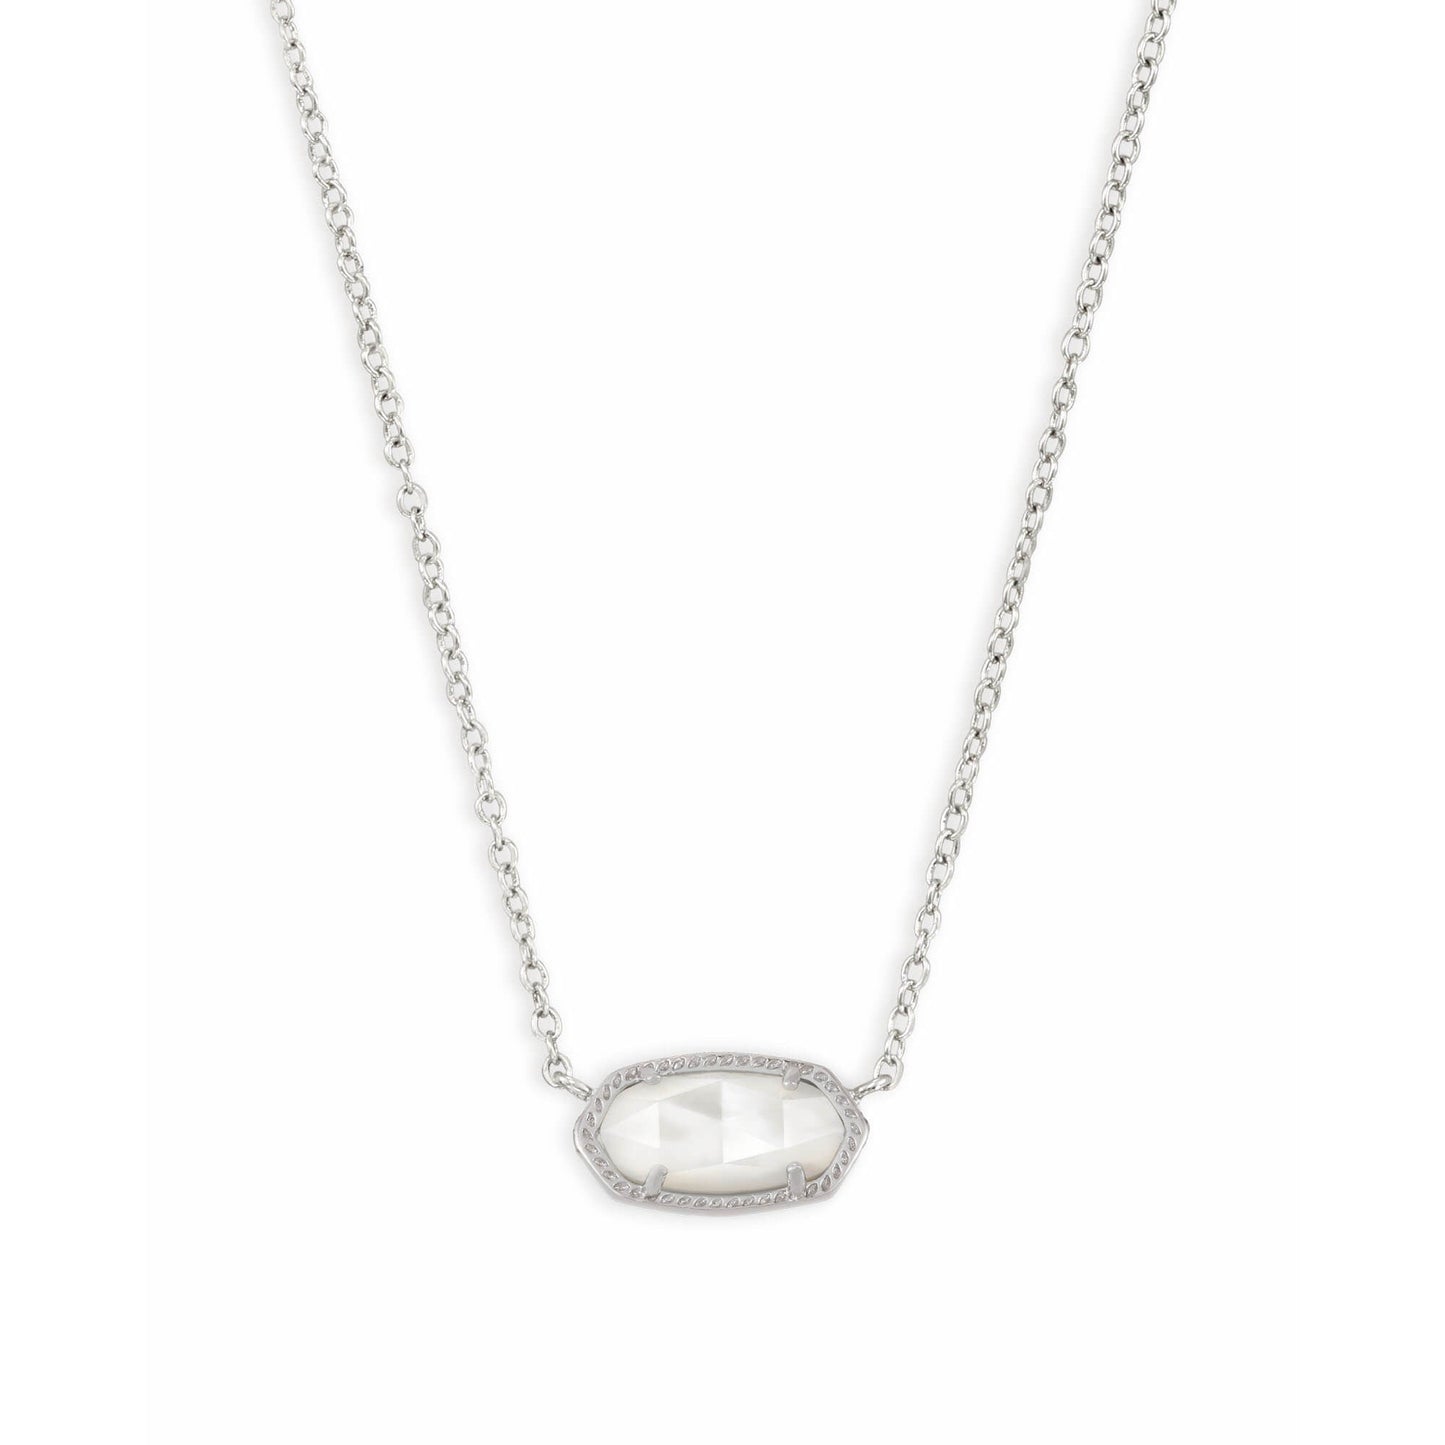 Kendra Scott - Elisa Silver Pendant Necklace in Mother-of-Pearl - Findlay Rowe Designs